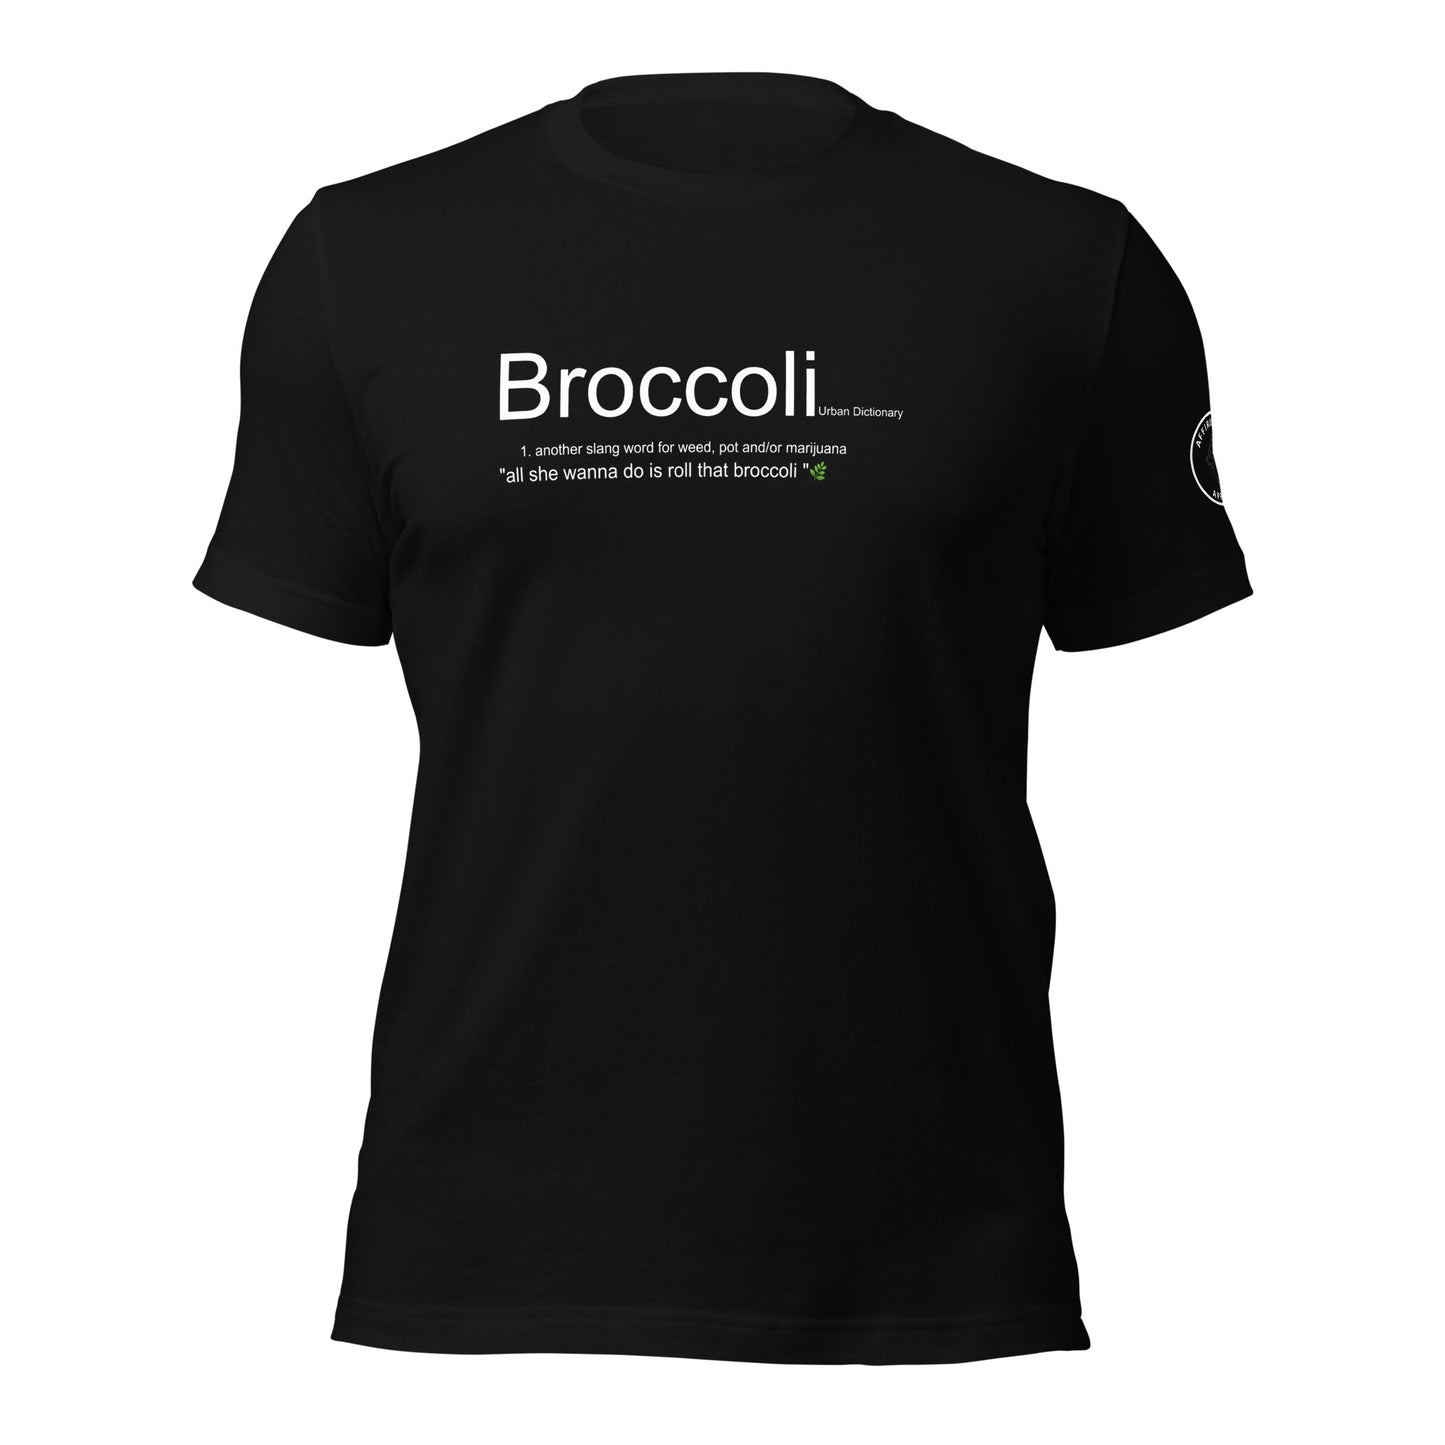 Broccoli - men's